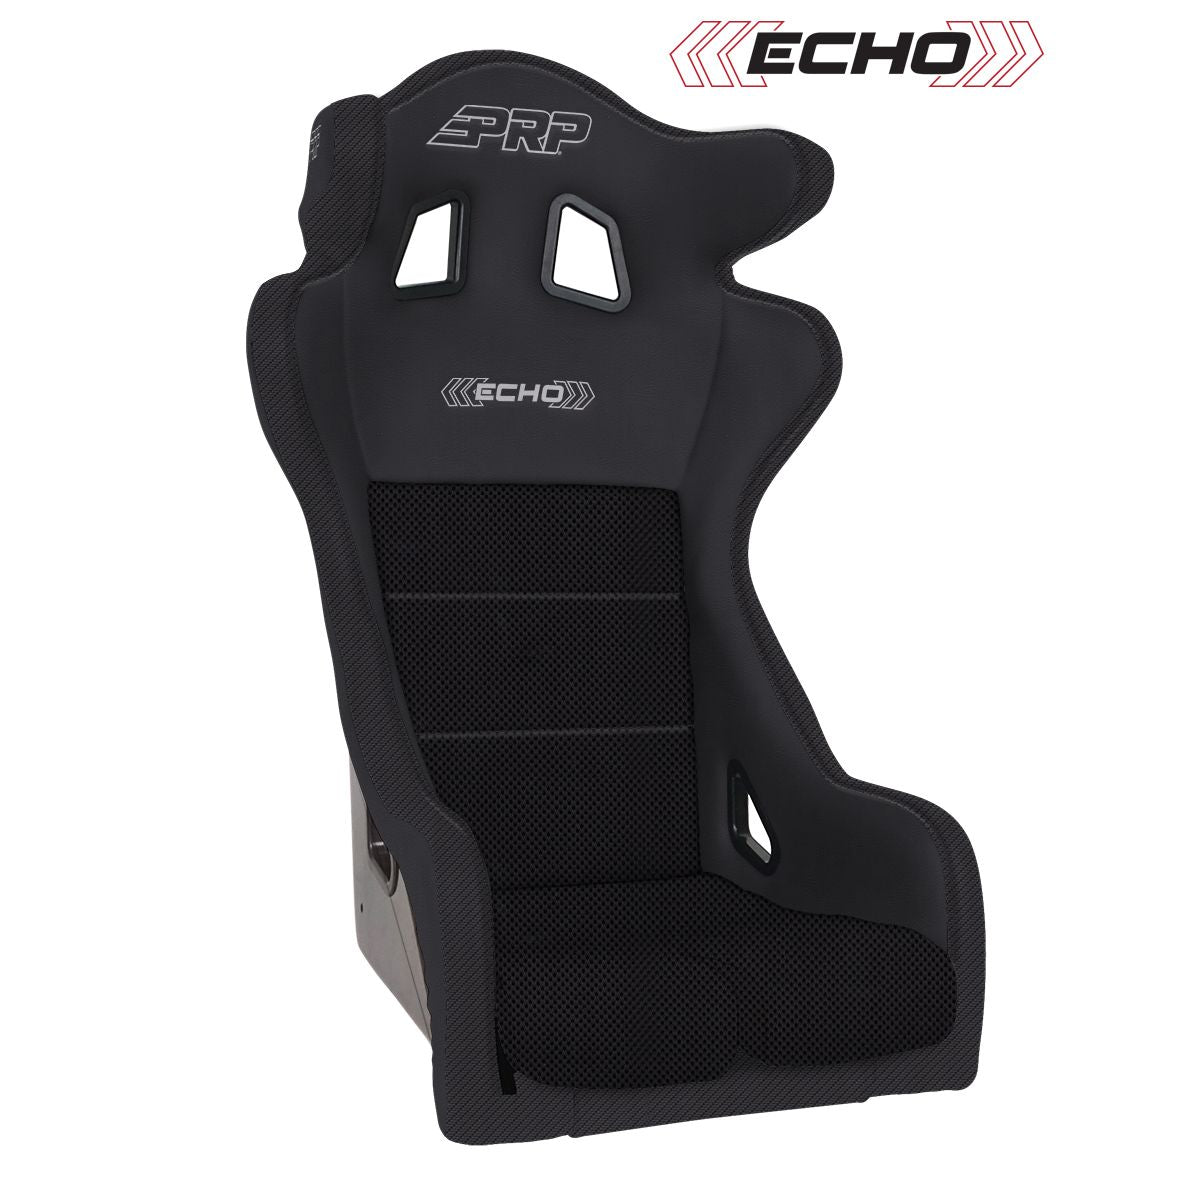 PRP-A38-201-Echo FIA Composite Race Seat